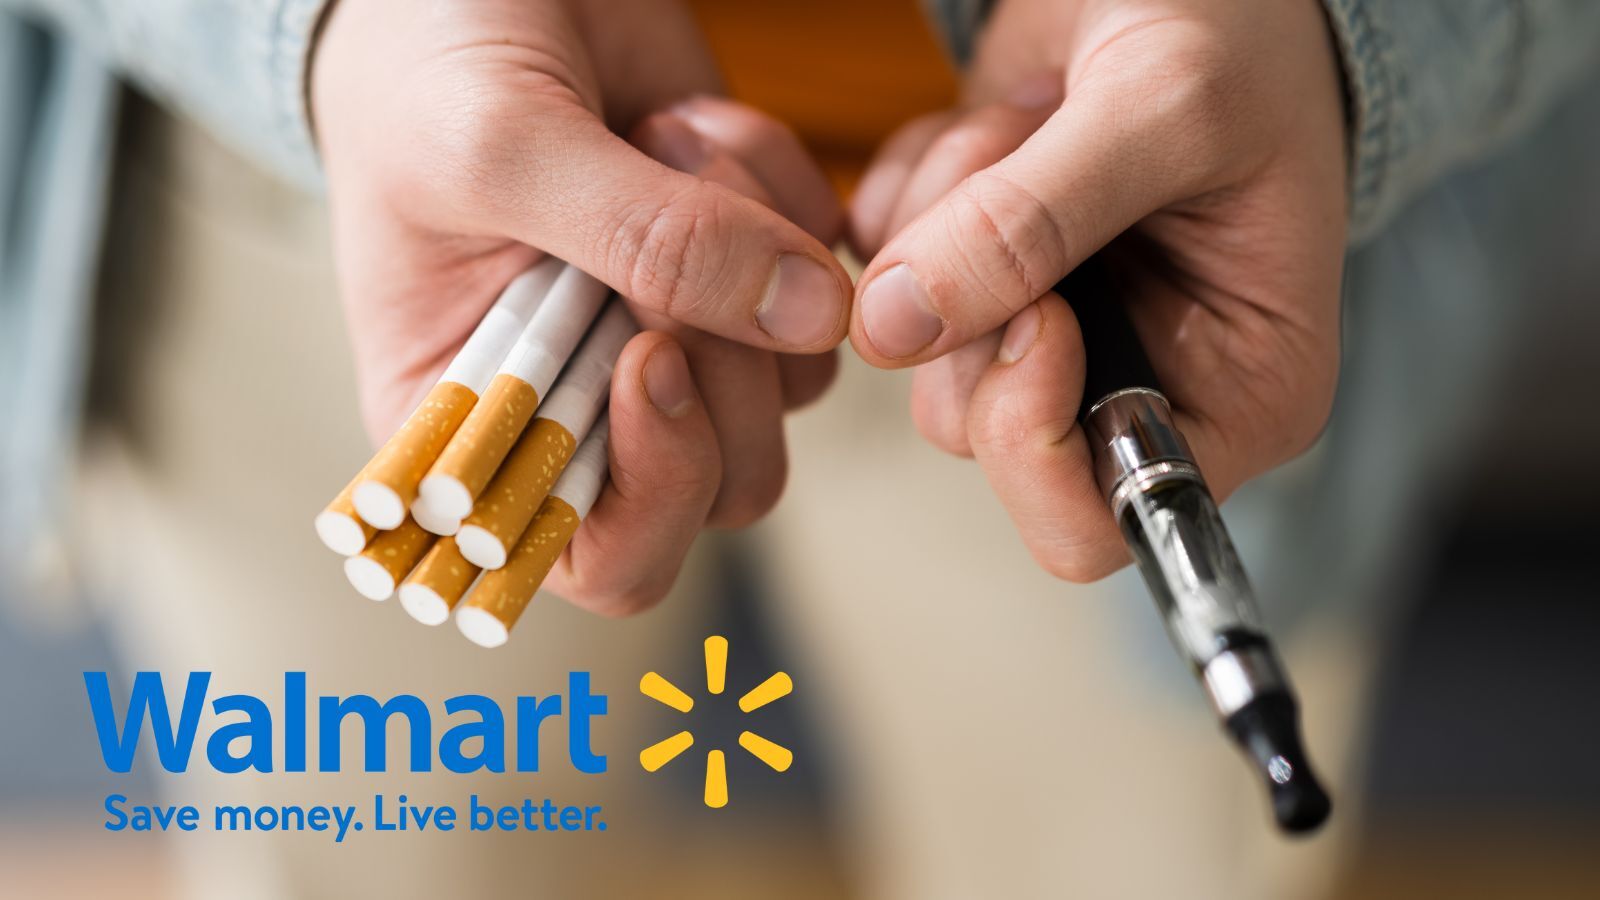 Does Walmart Sell Cigarettes, Cigars, and E-Cigarettes?